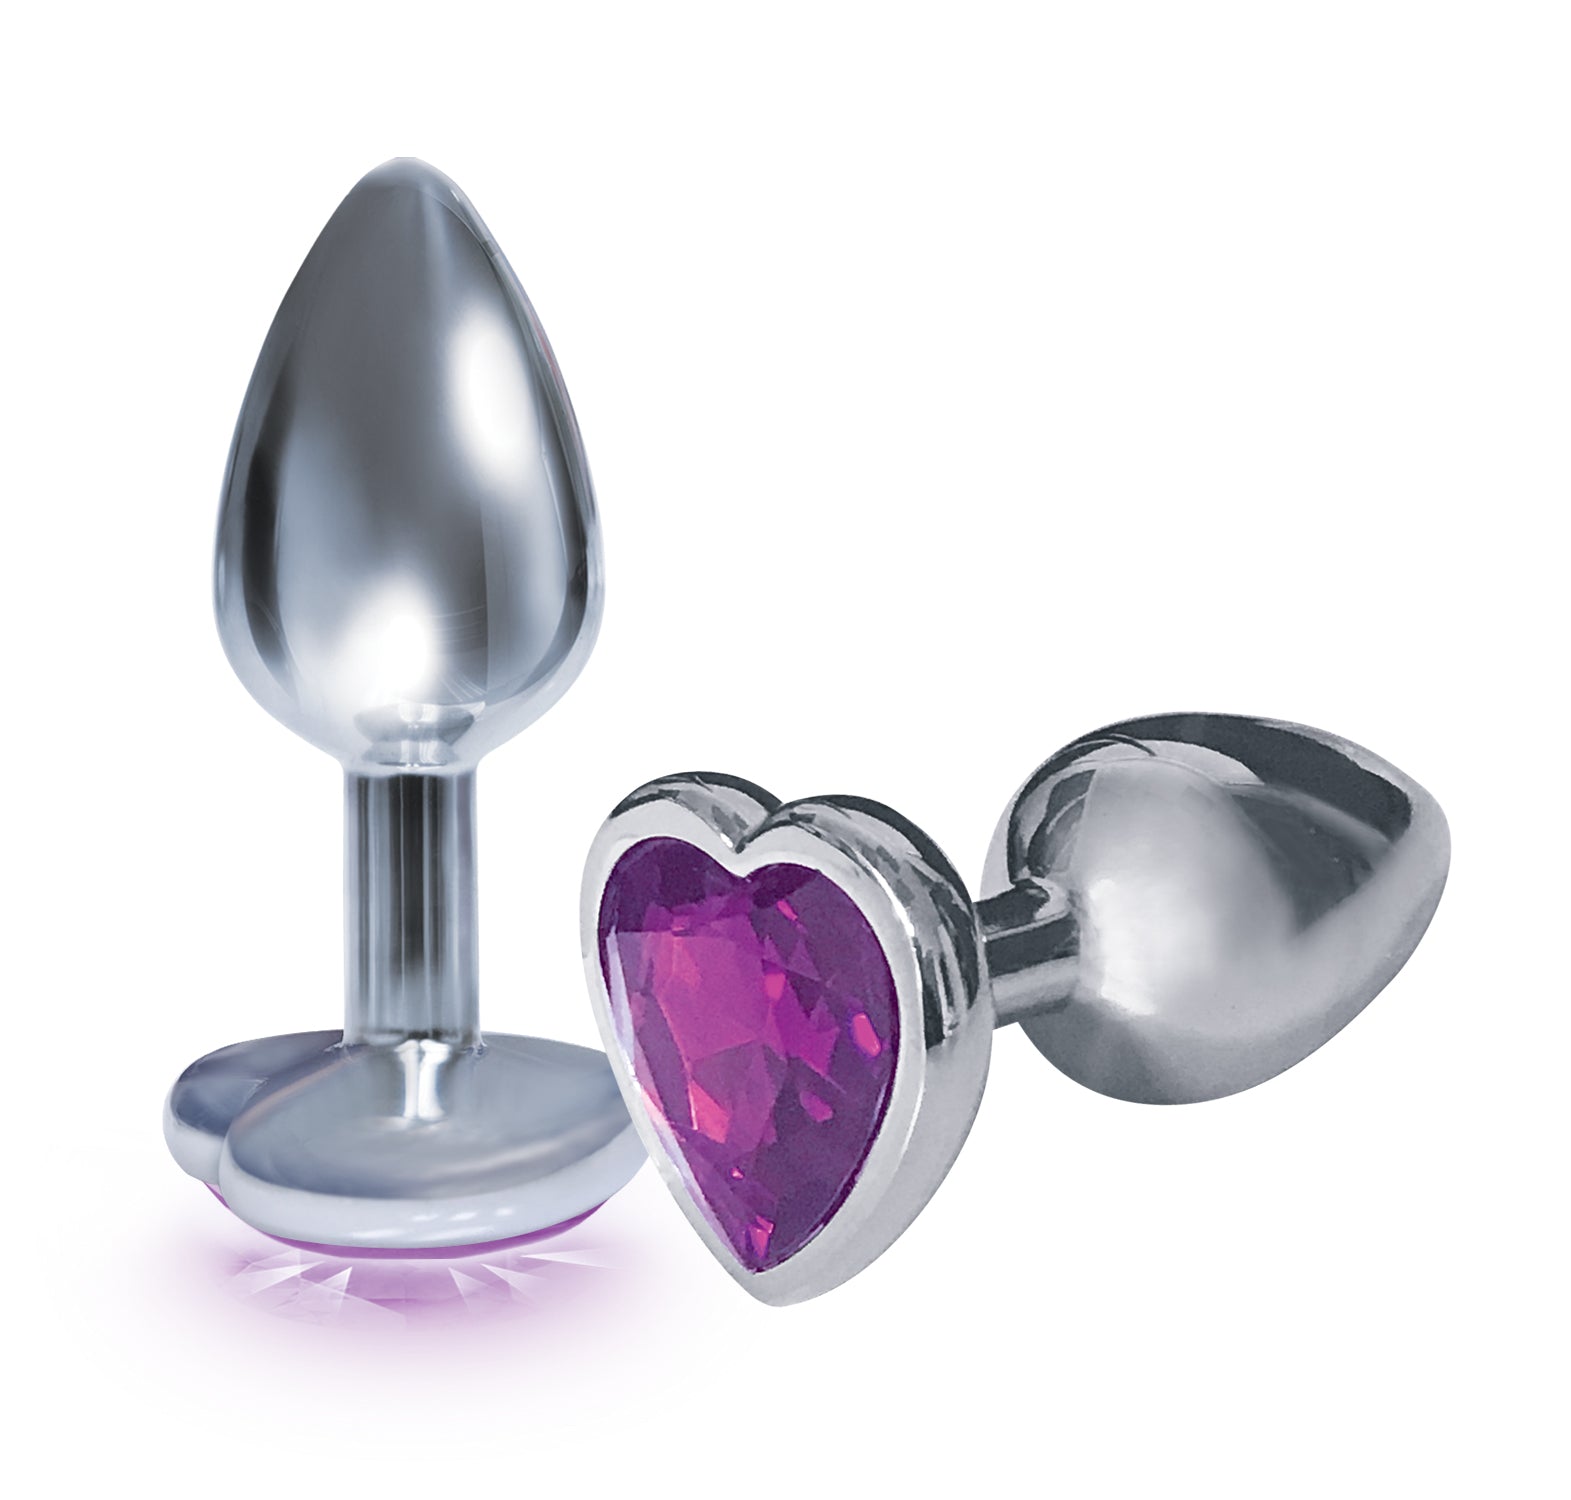 9's Silver Starter Heart Bejeweled Steel Plug